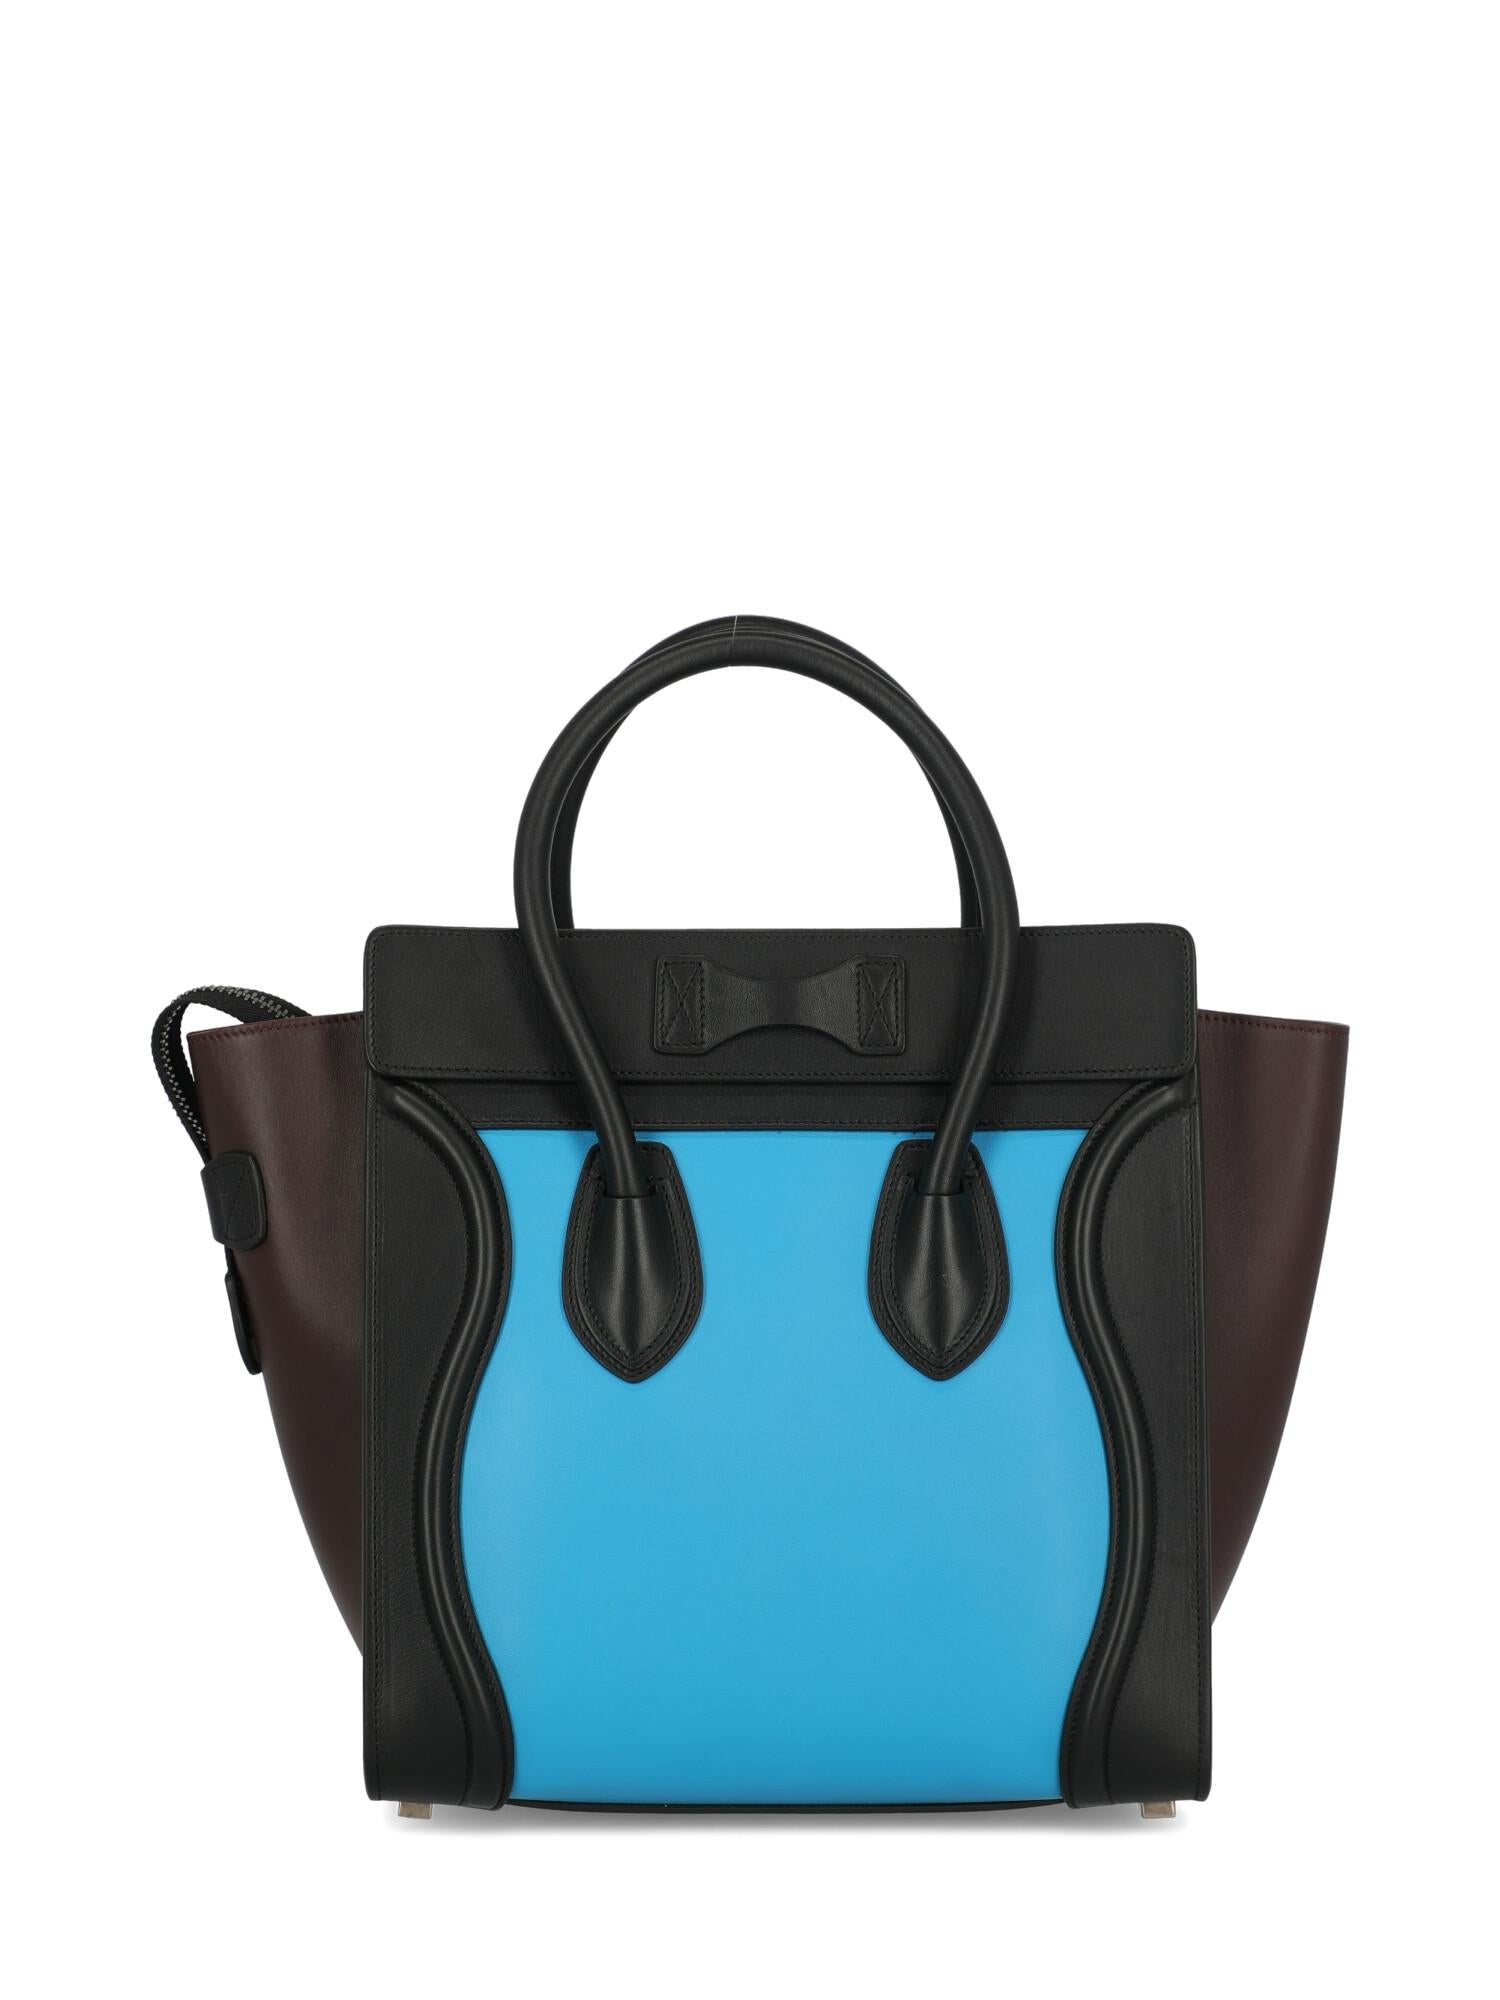 Celine Women's Handbag Luggage Black/Blue/Burgundy Leather For Sale 1